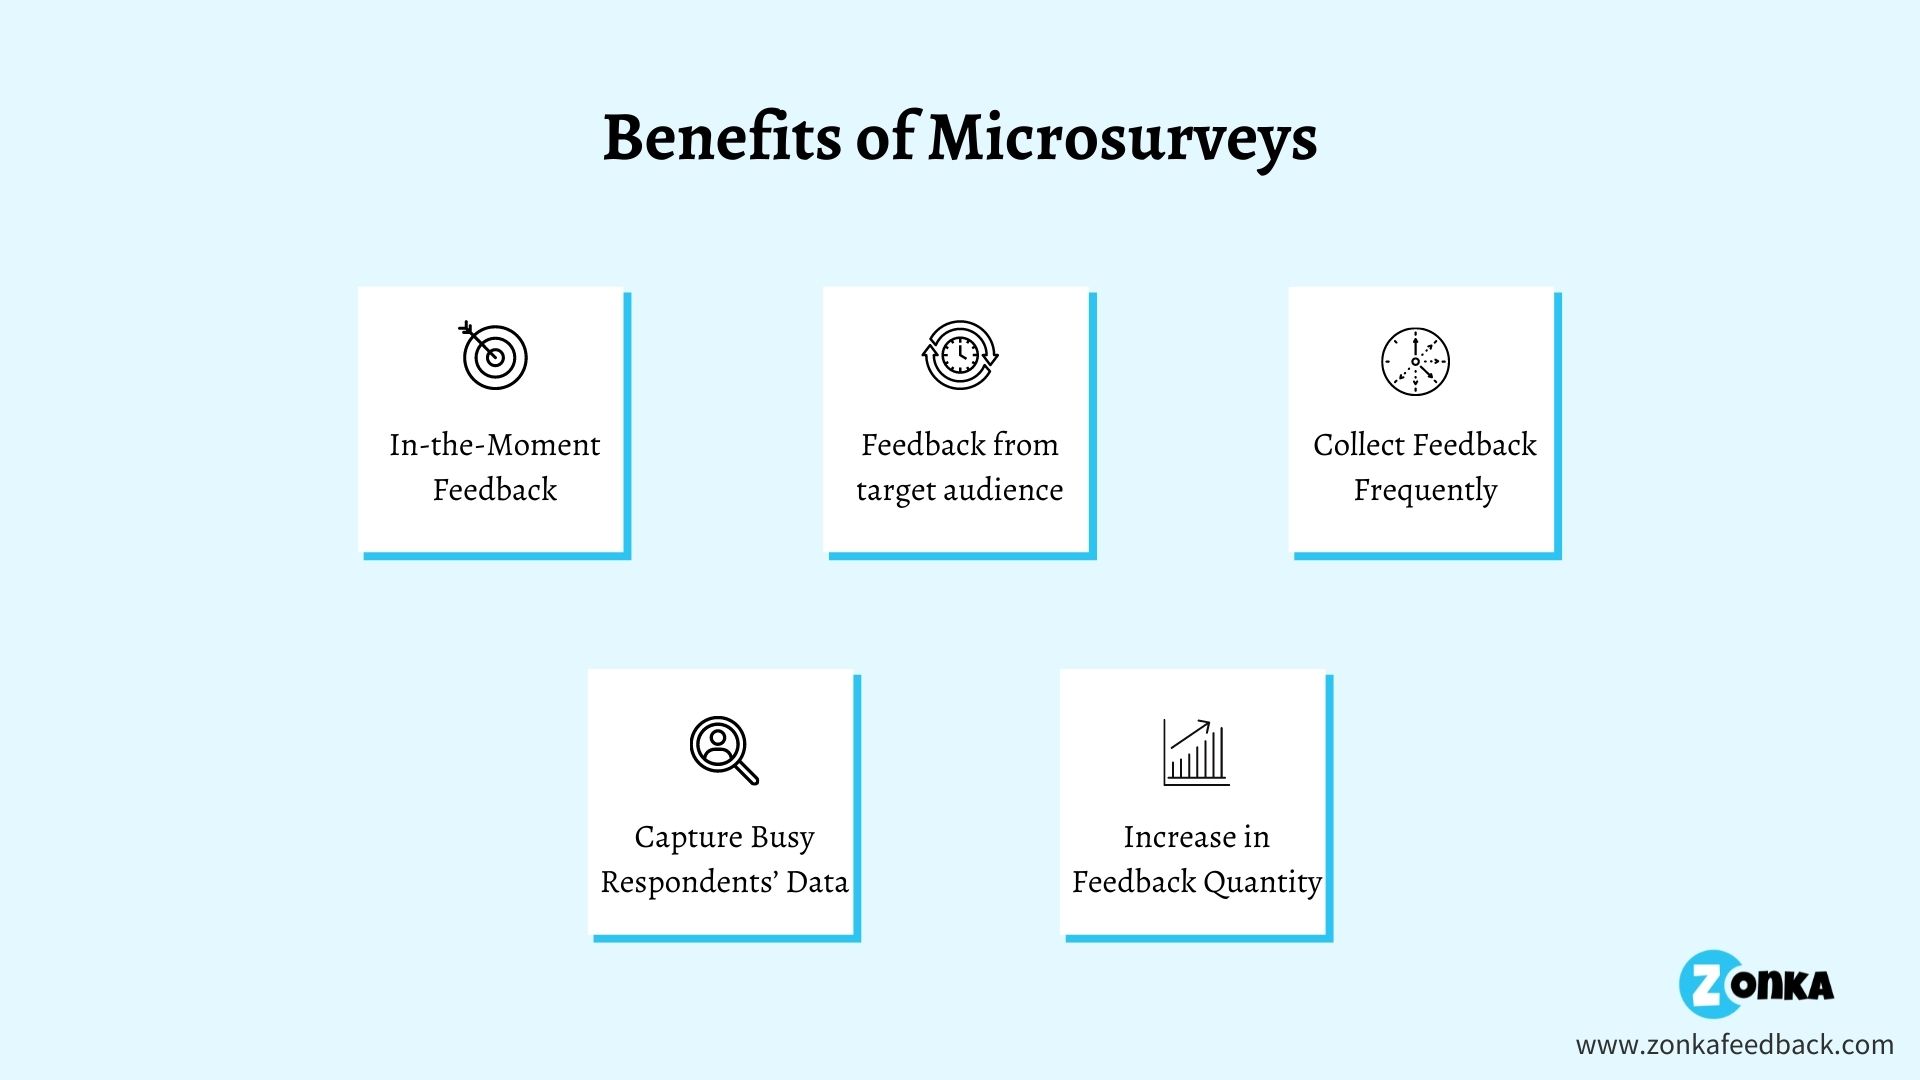 Benefits of a Microsurvey